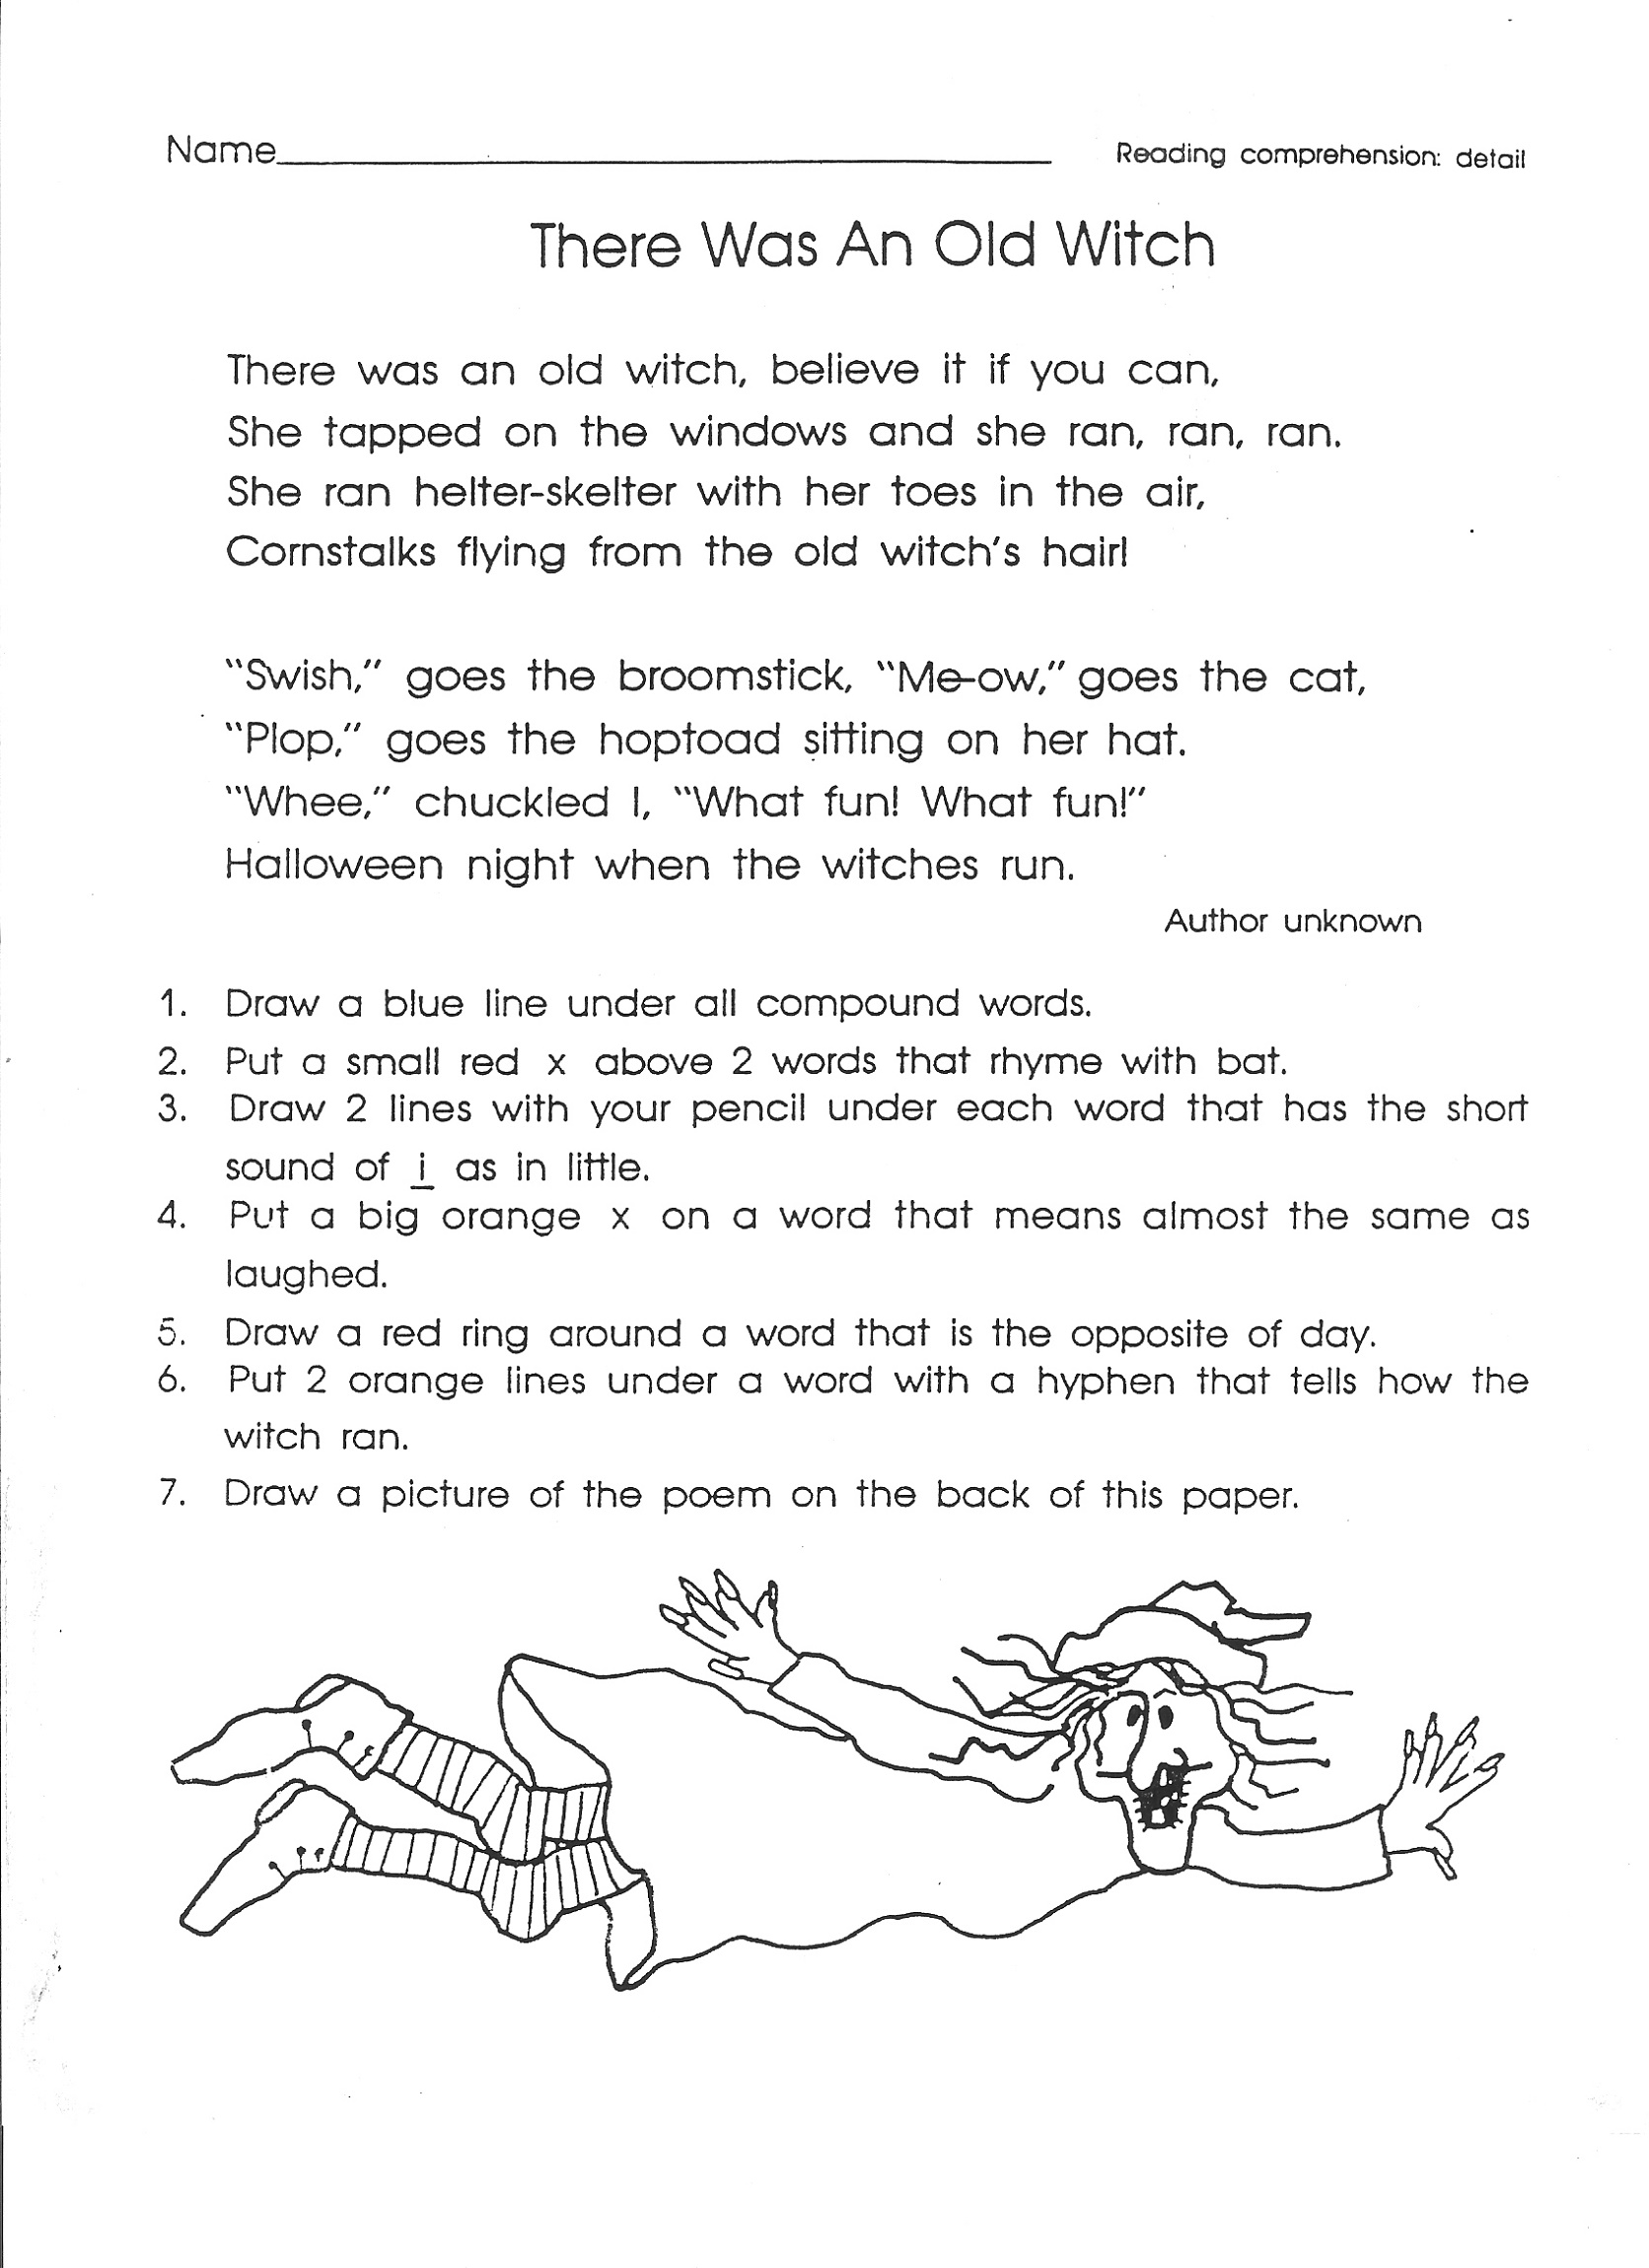 4th grade reading comprehension worksheets pdf for print db excelcom